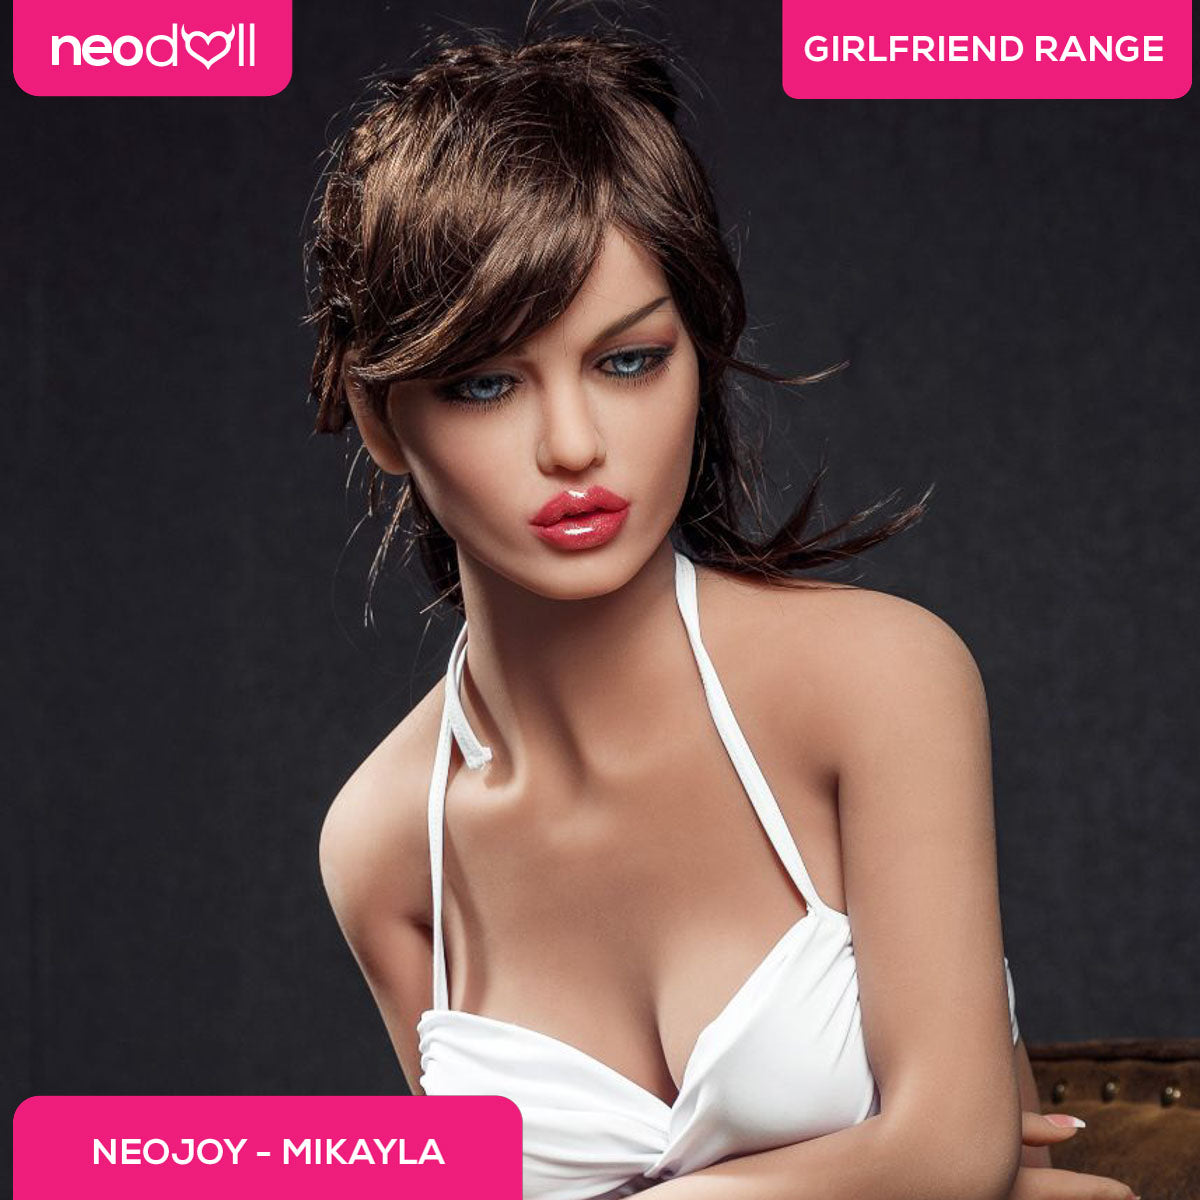 Neodoll Girlfriend Matilda - Realistic Sex Doll - 148cm - Tan